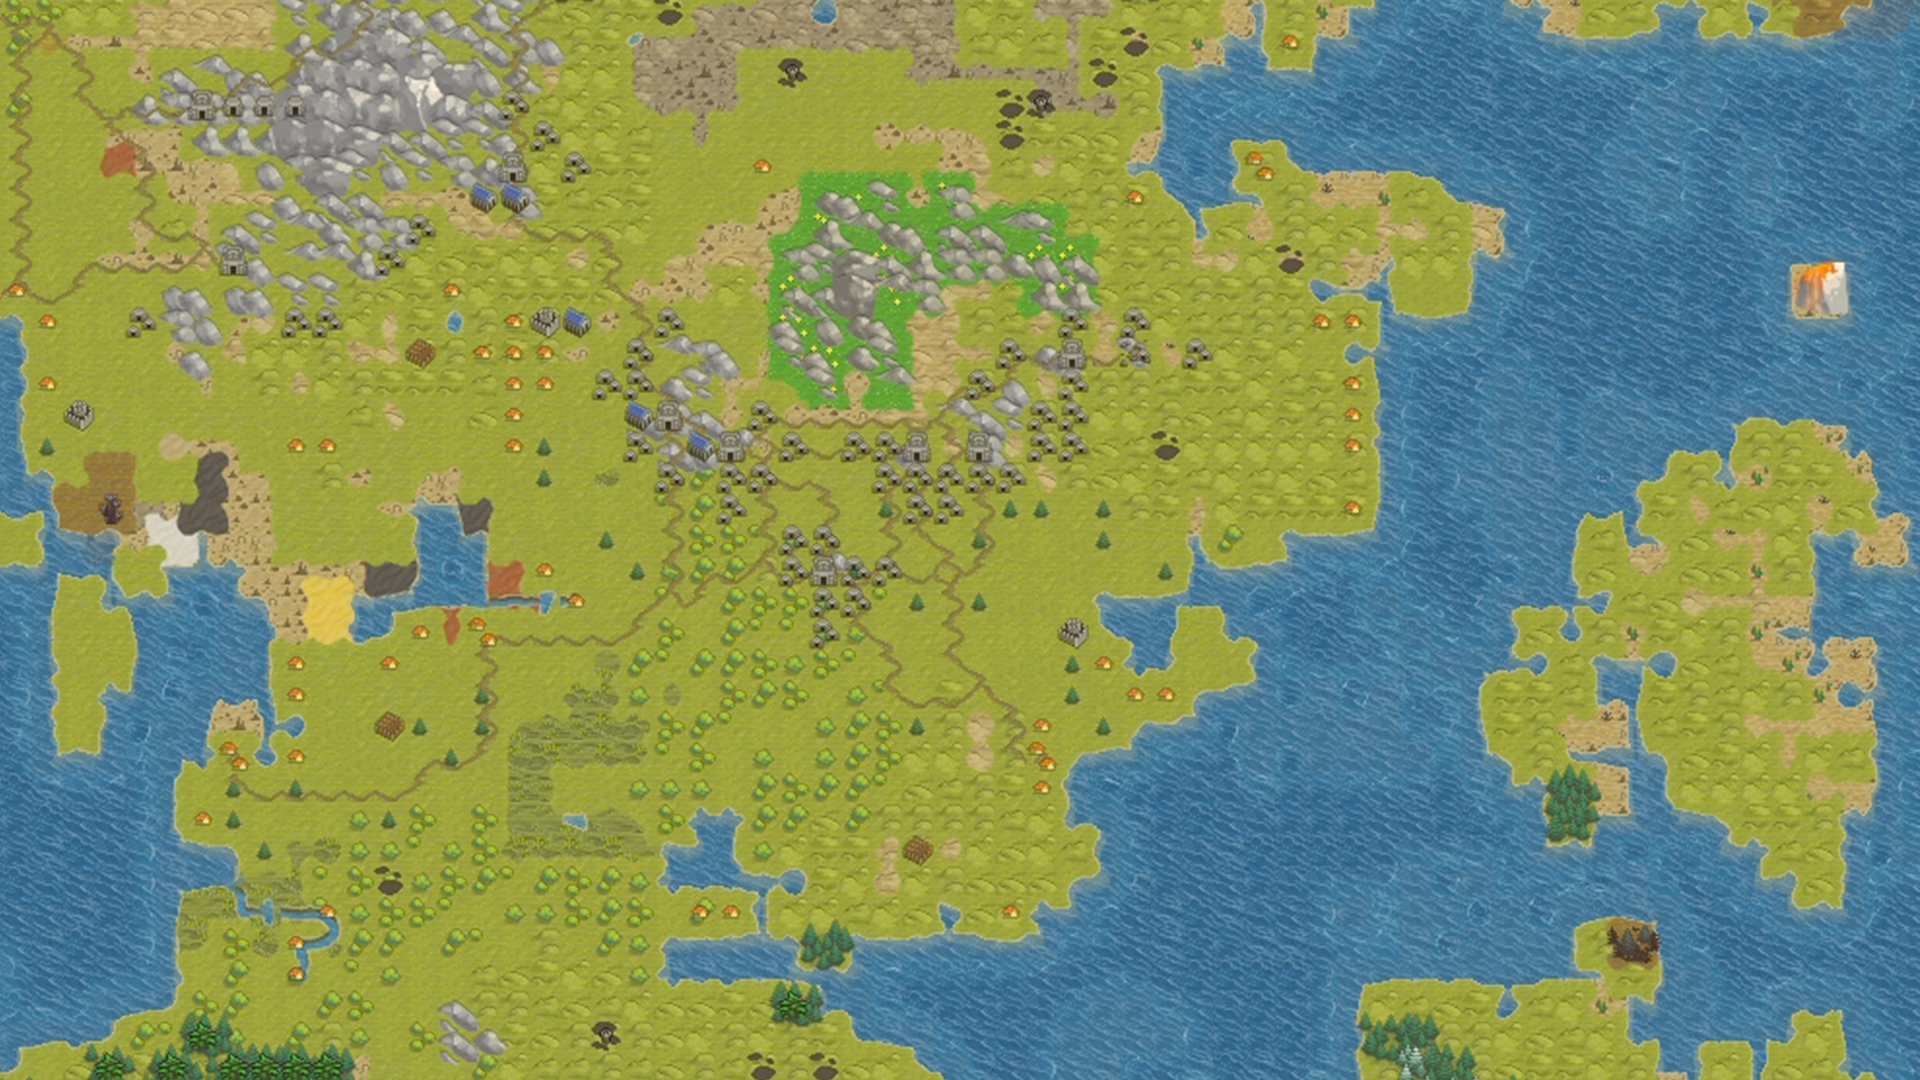 A screenshot of a Dwarf Fortress world